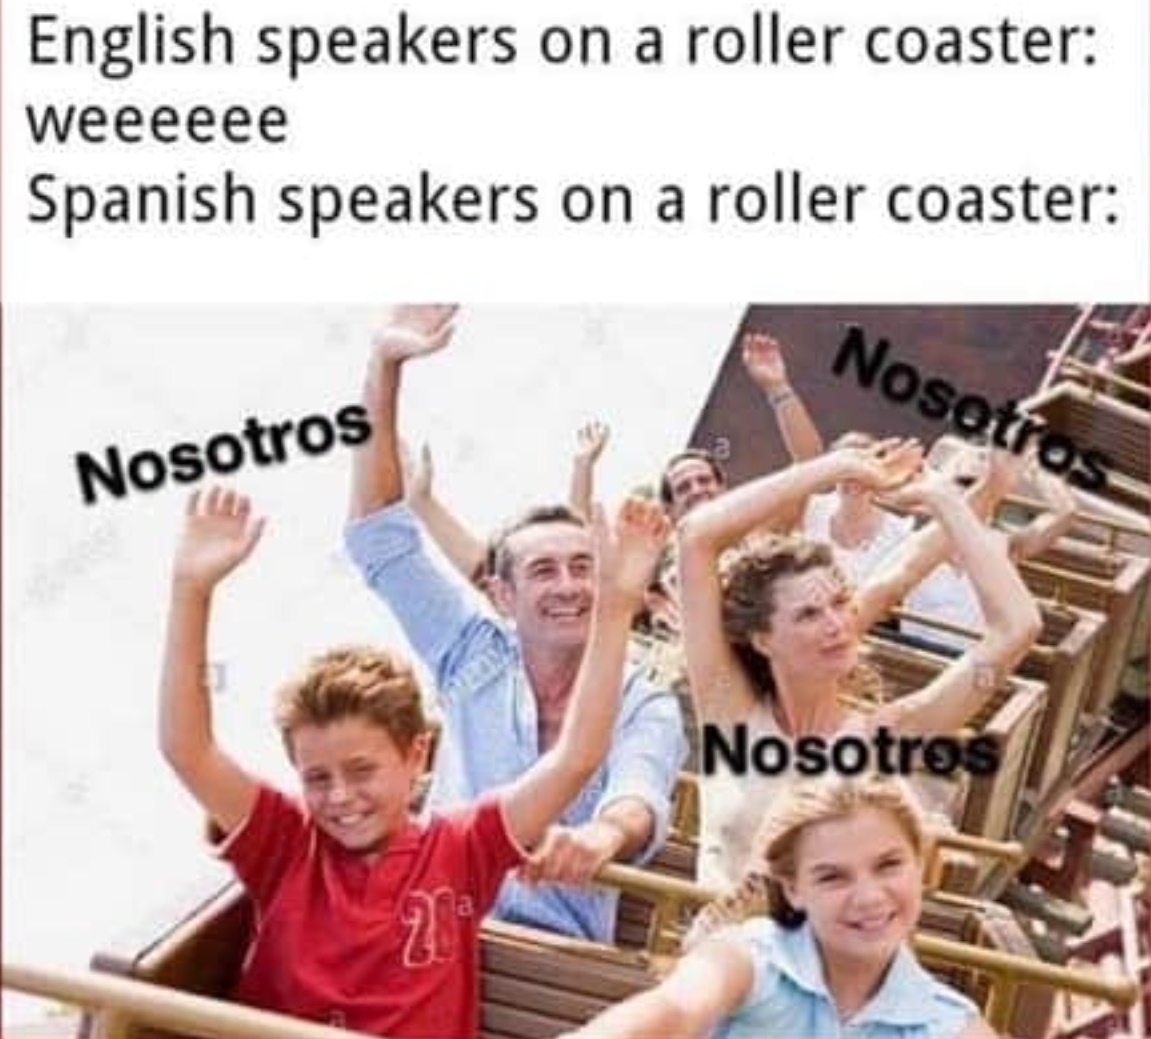 funny memes and random pics - we nosotros meme - English speakers on a roller coaster weeeeee Spanish speakers on a roller coaster Nosotros Nosotros Nosotros 20